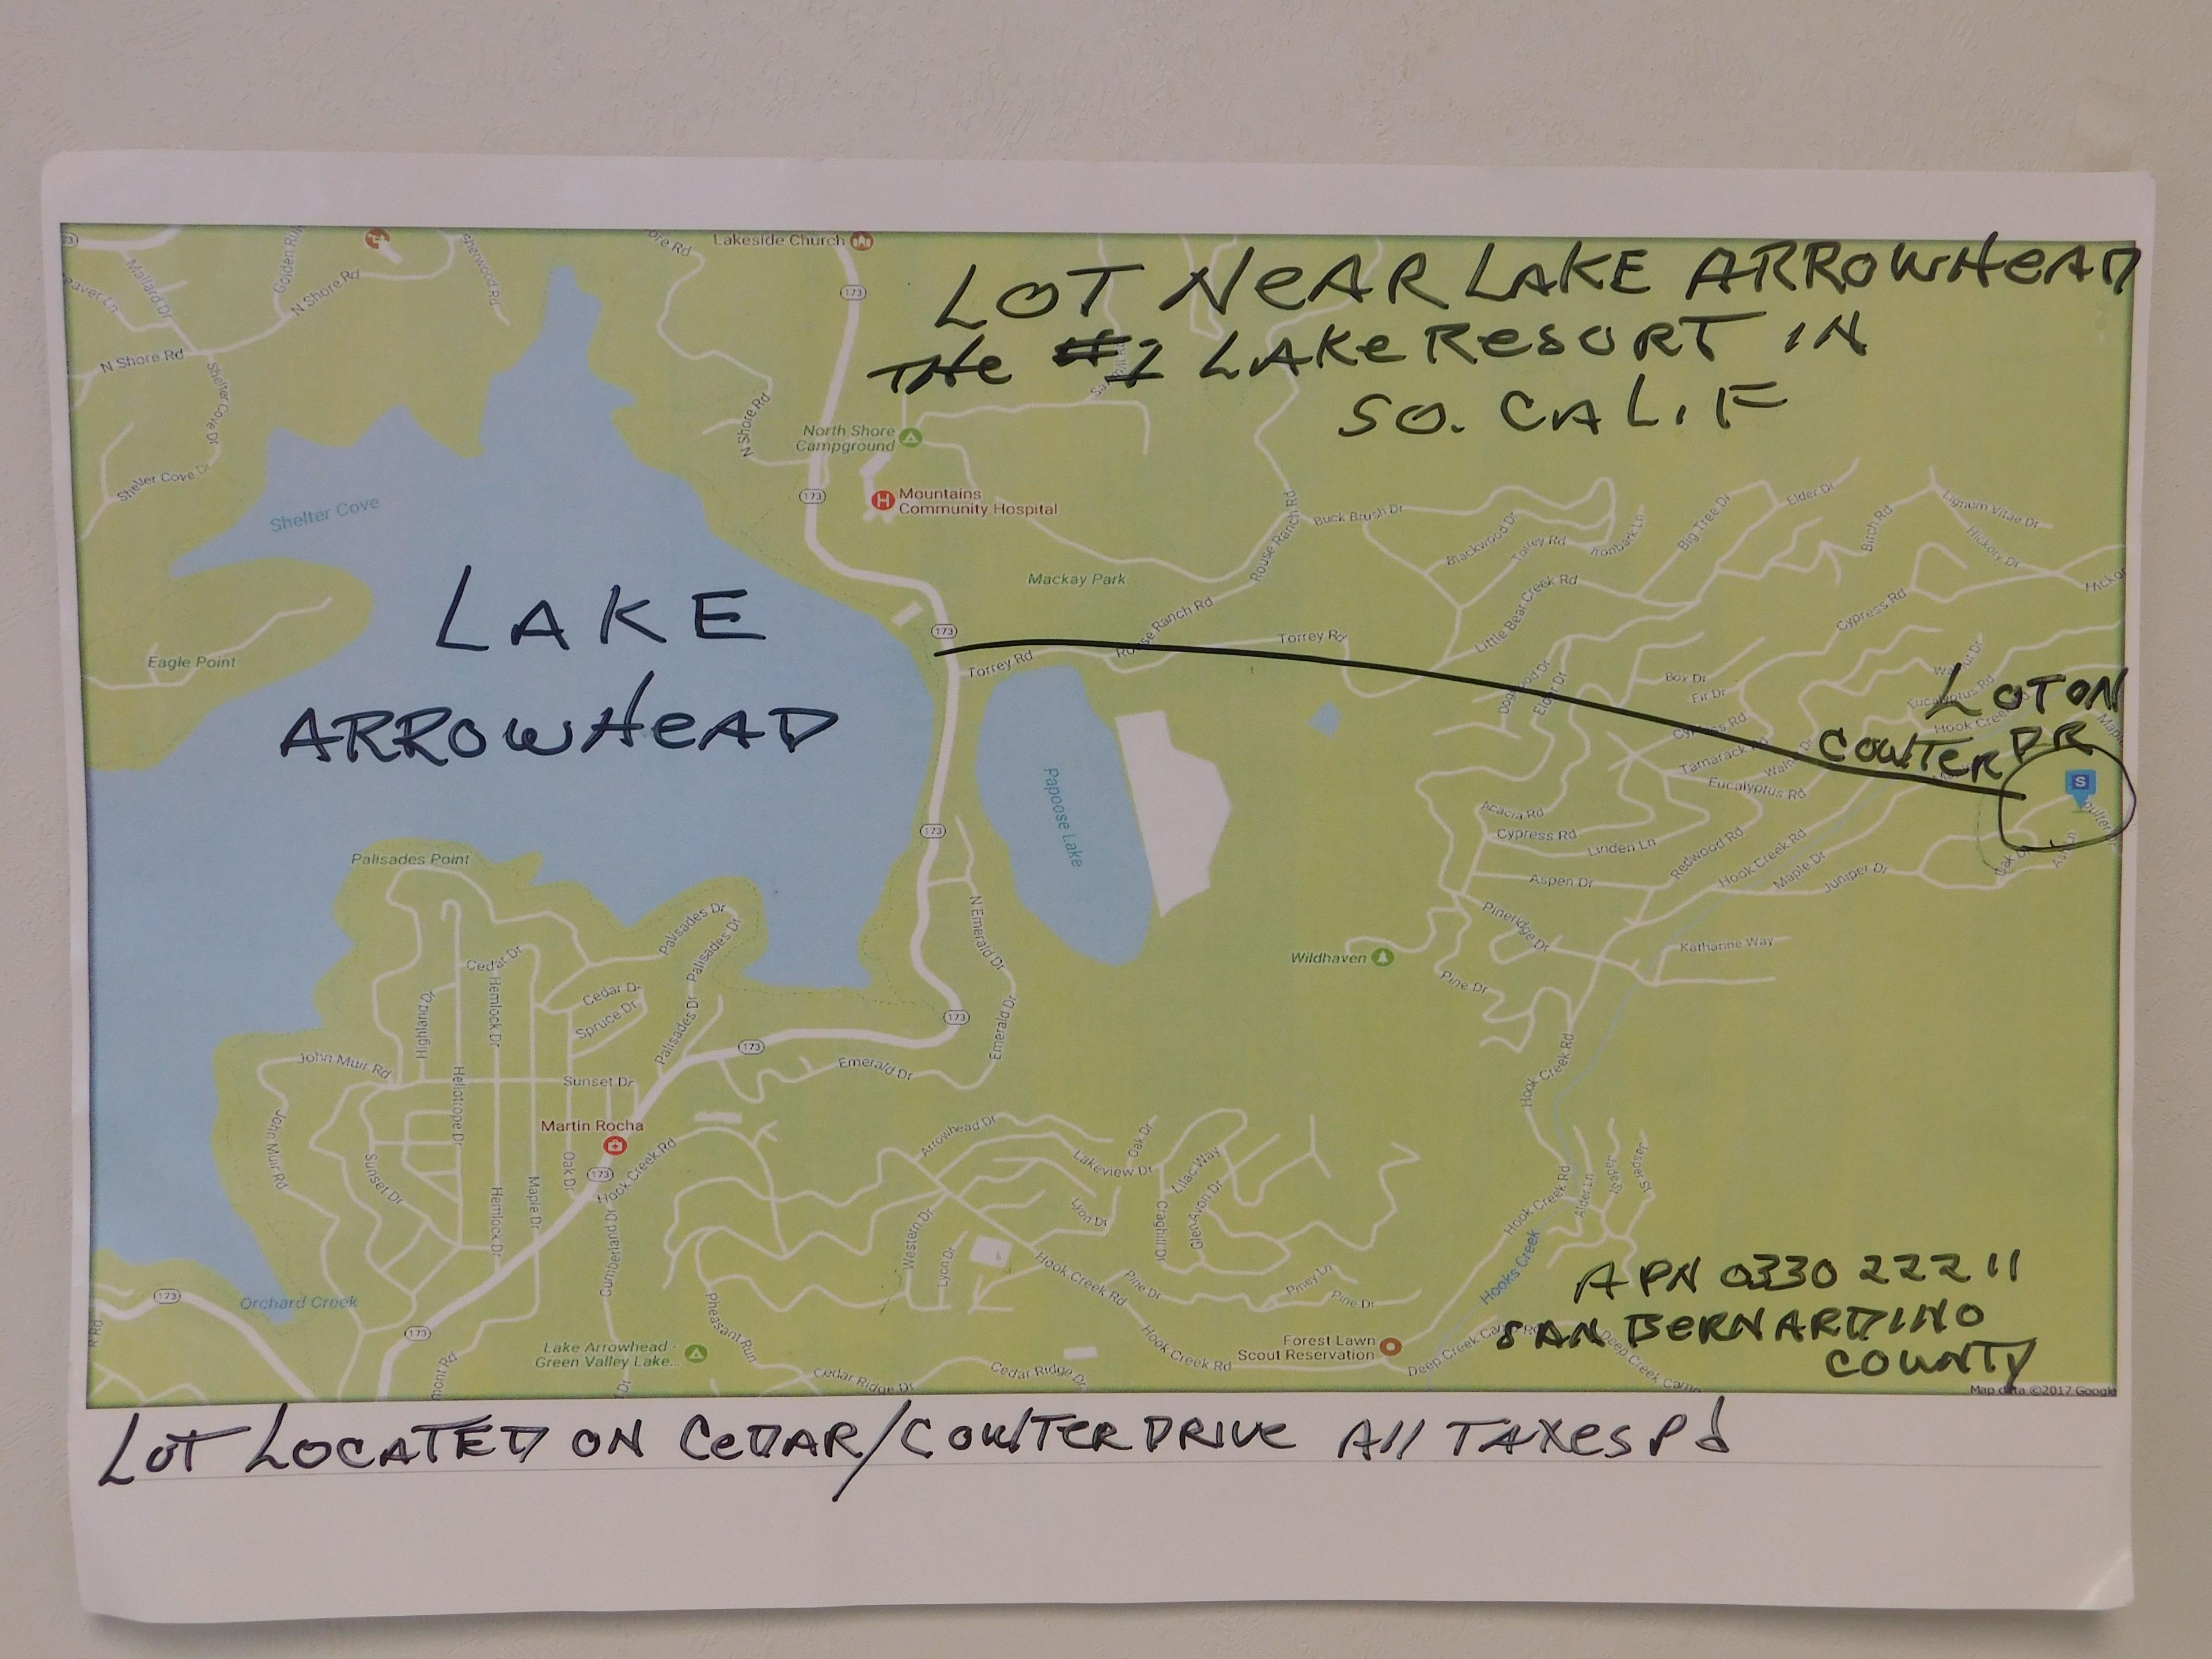 #1 -  LOT NEAR LAKE ARROWHEAD